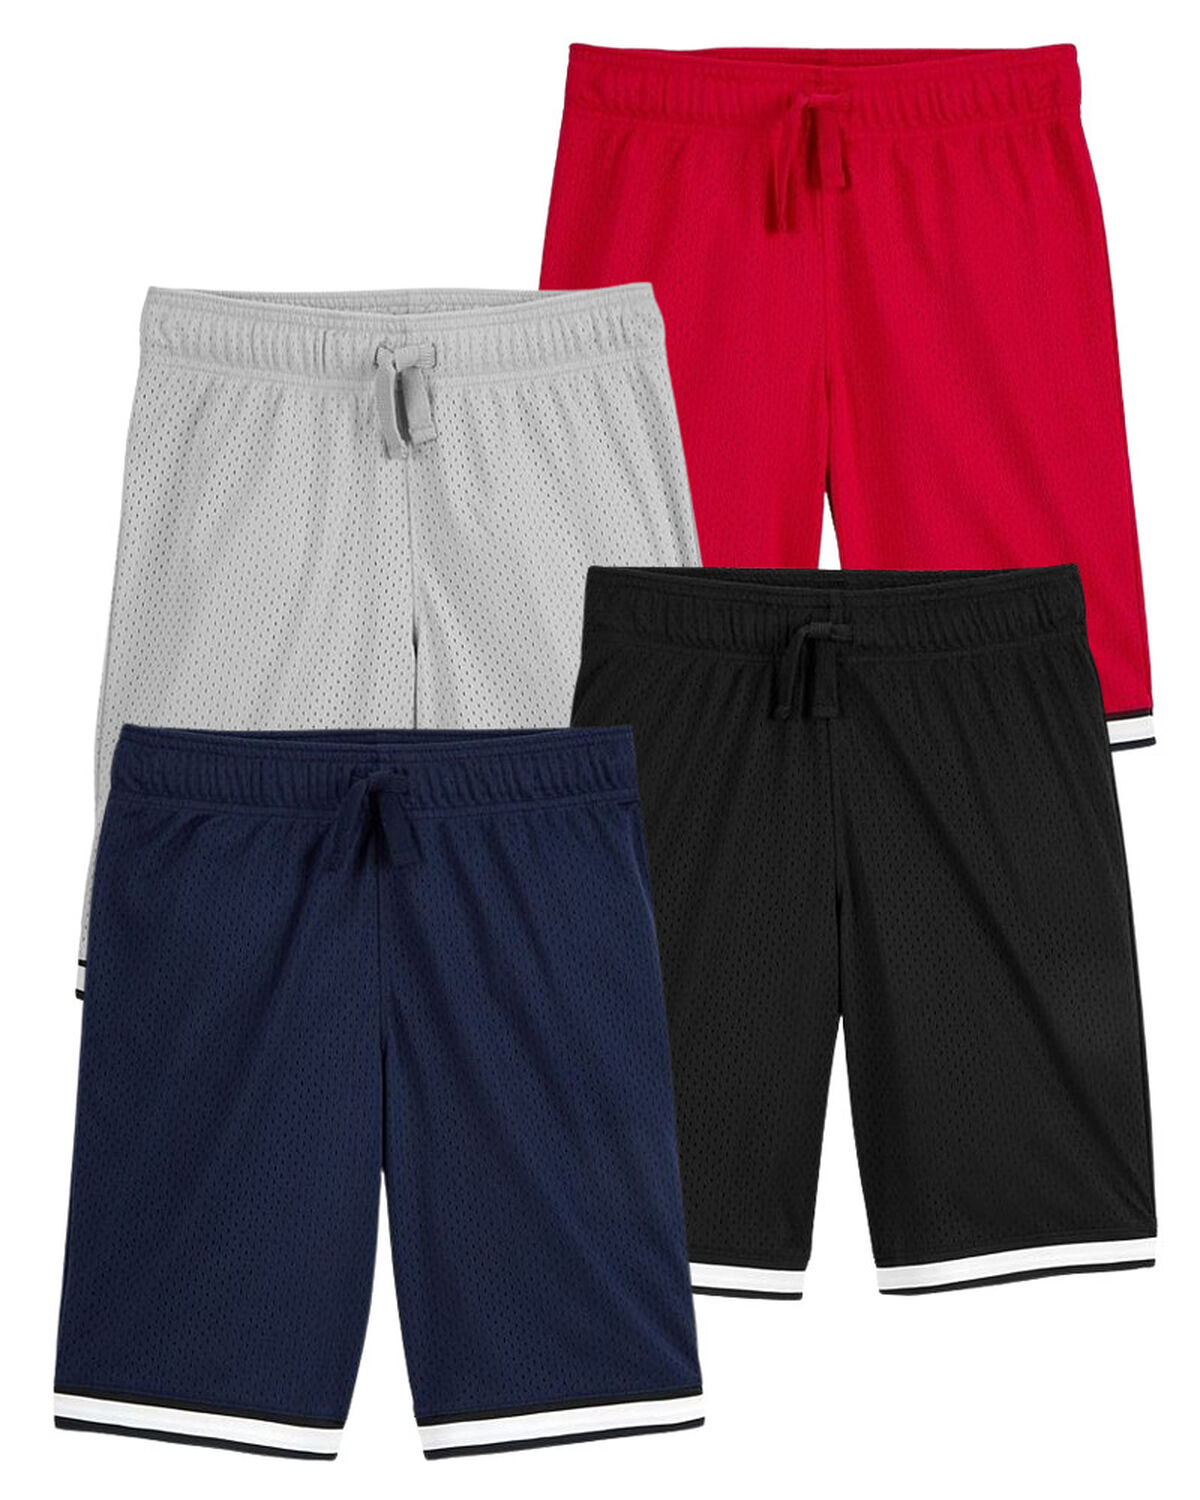 Multi Kid 4-Pack Sporty Mesh Fan Favorite Shorts Set | carters.com